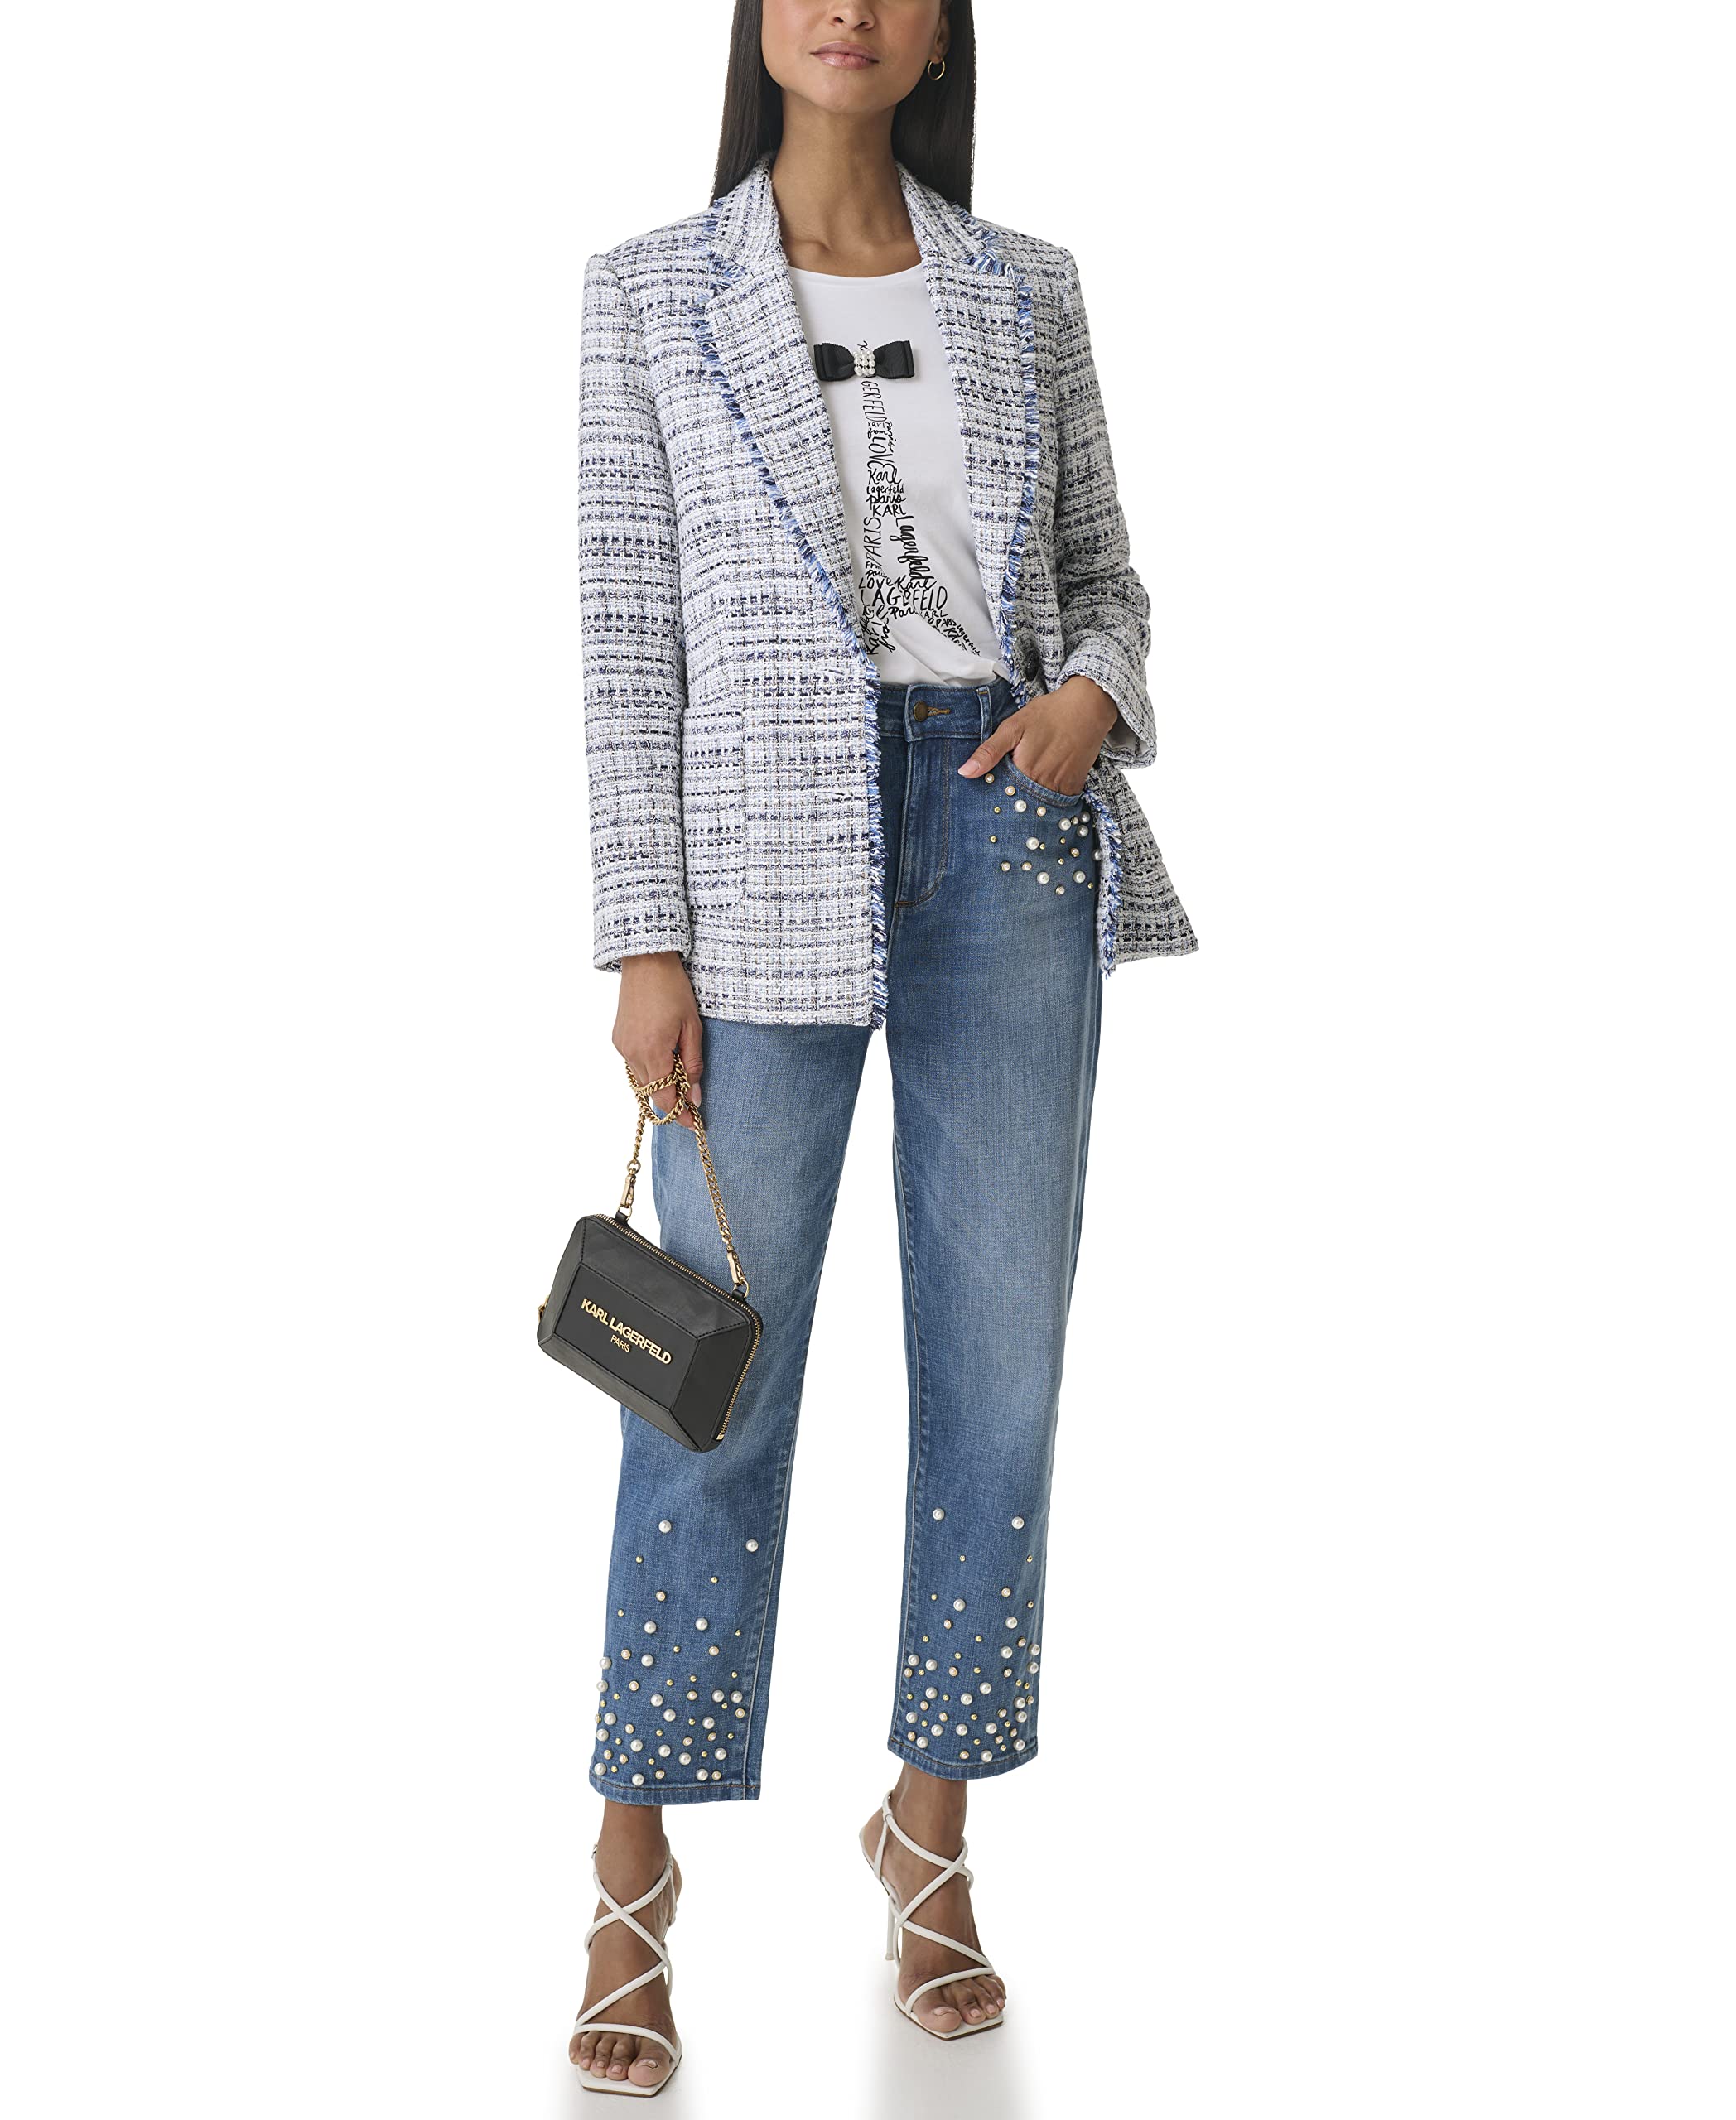 Karl Lagerfeld Paris Women's Tweed Long Sleeve Everyday Fashion Sport Jacket